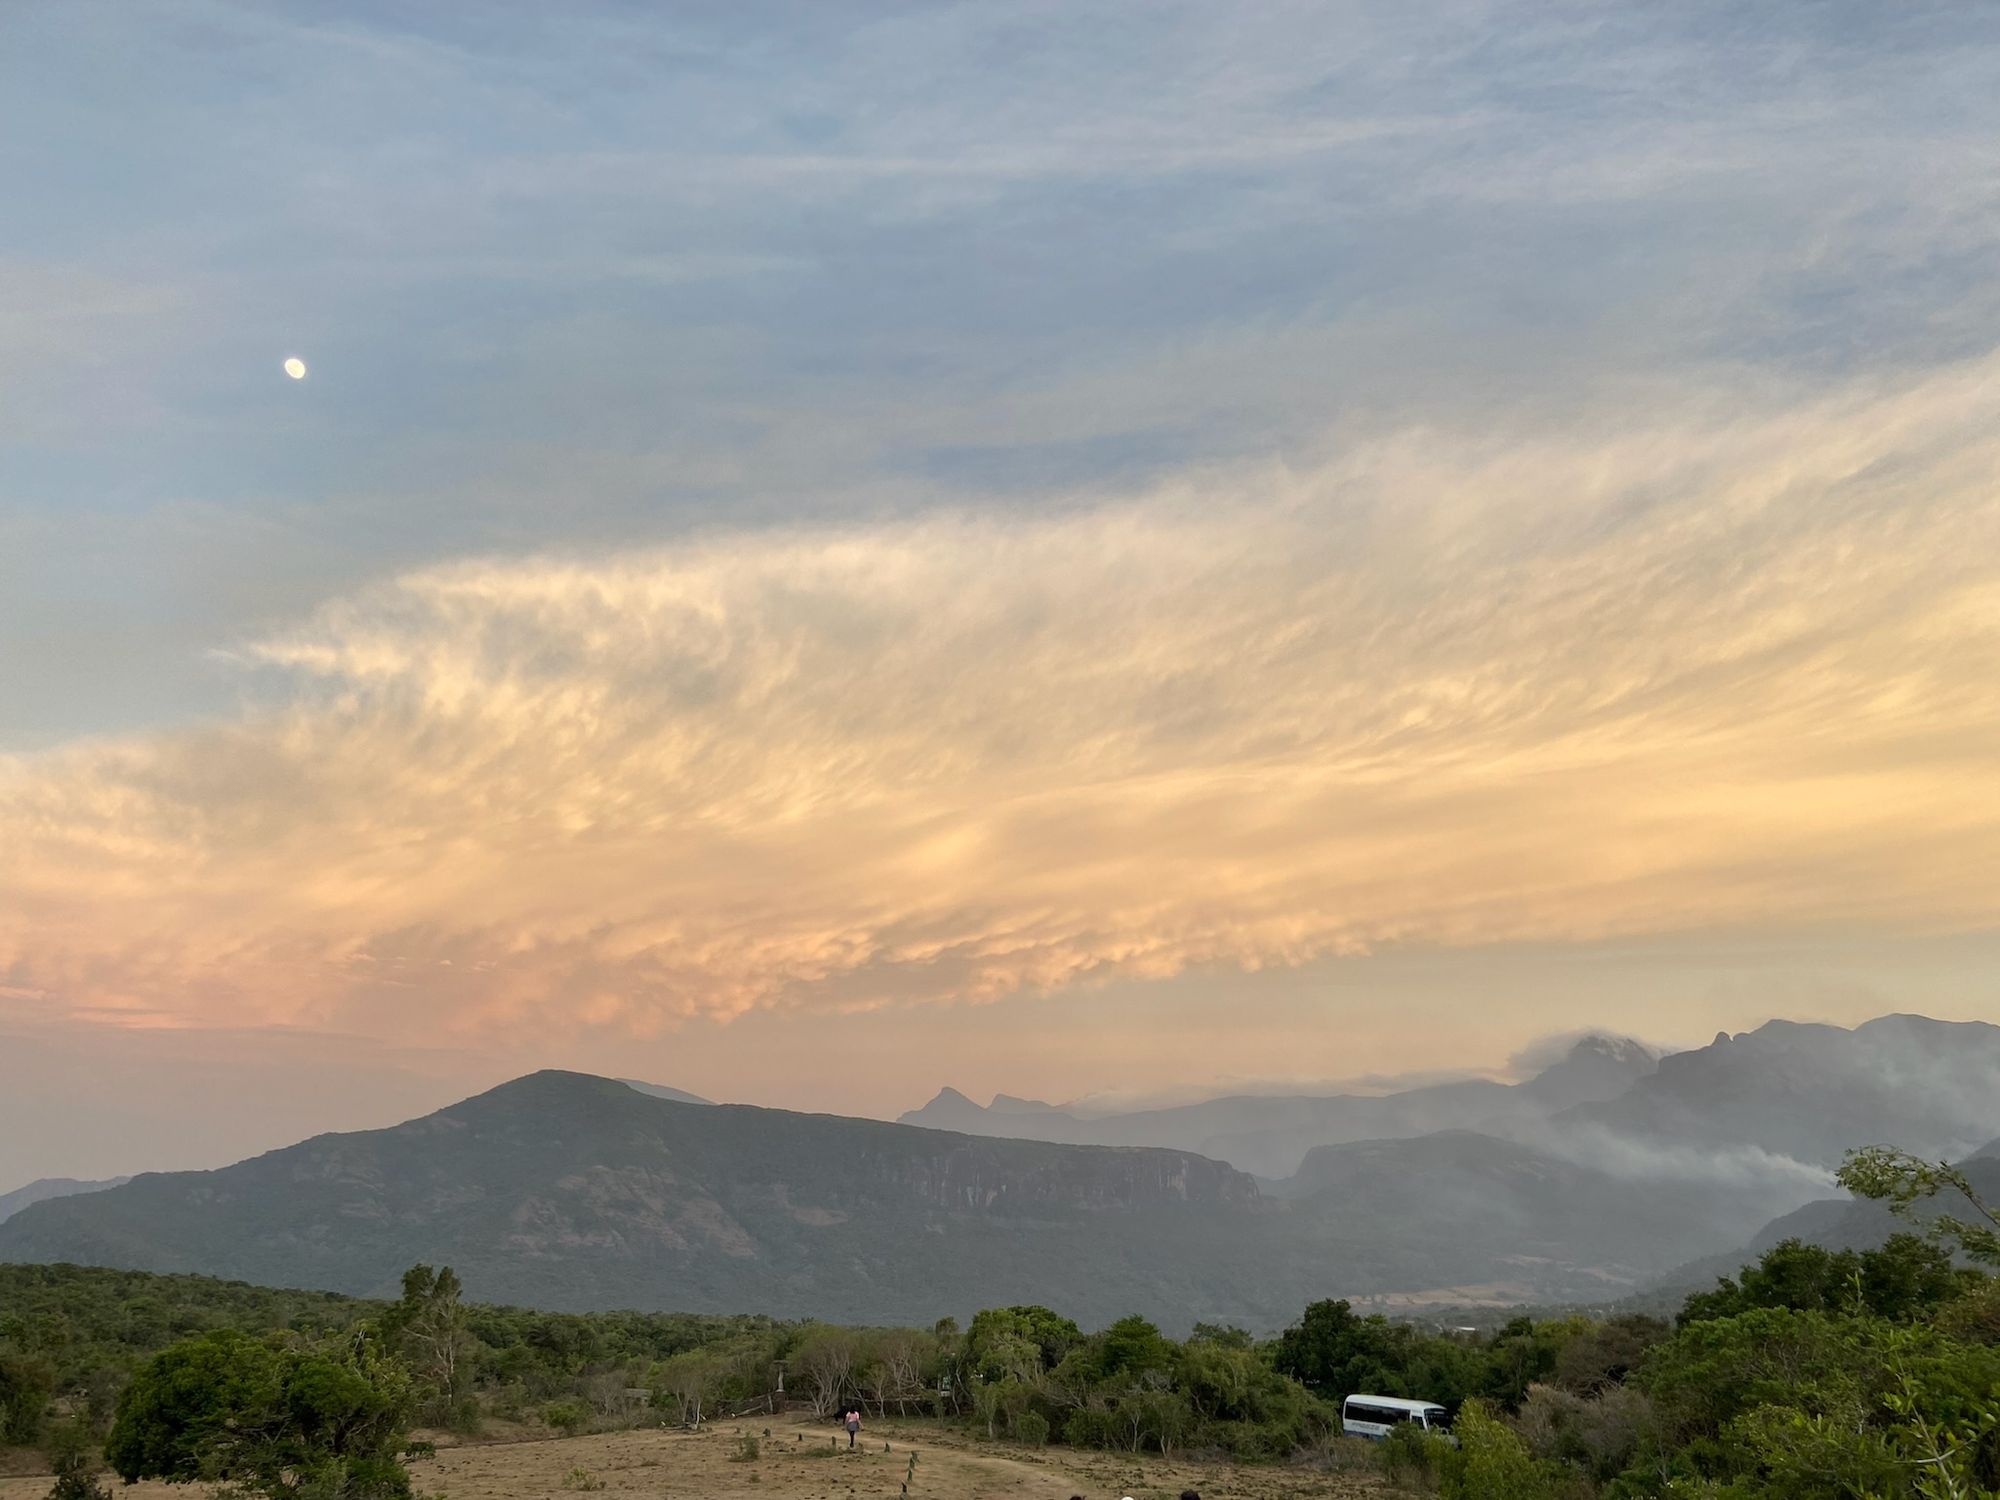 Pitawala Pathana in Riverston, Sri Lanka, with the mountains and cloudy, orange sky